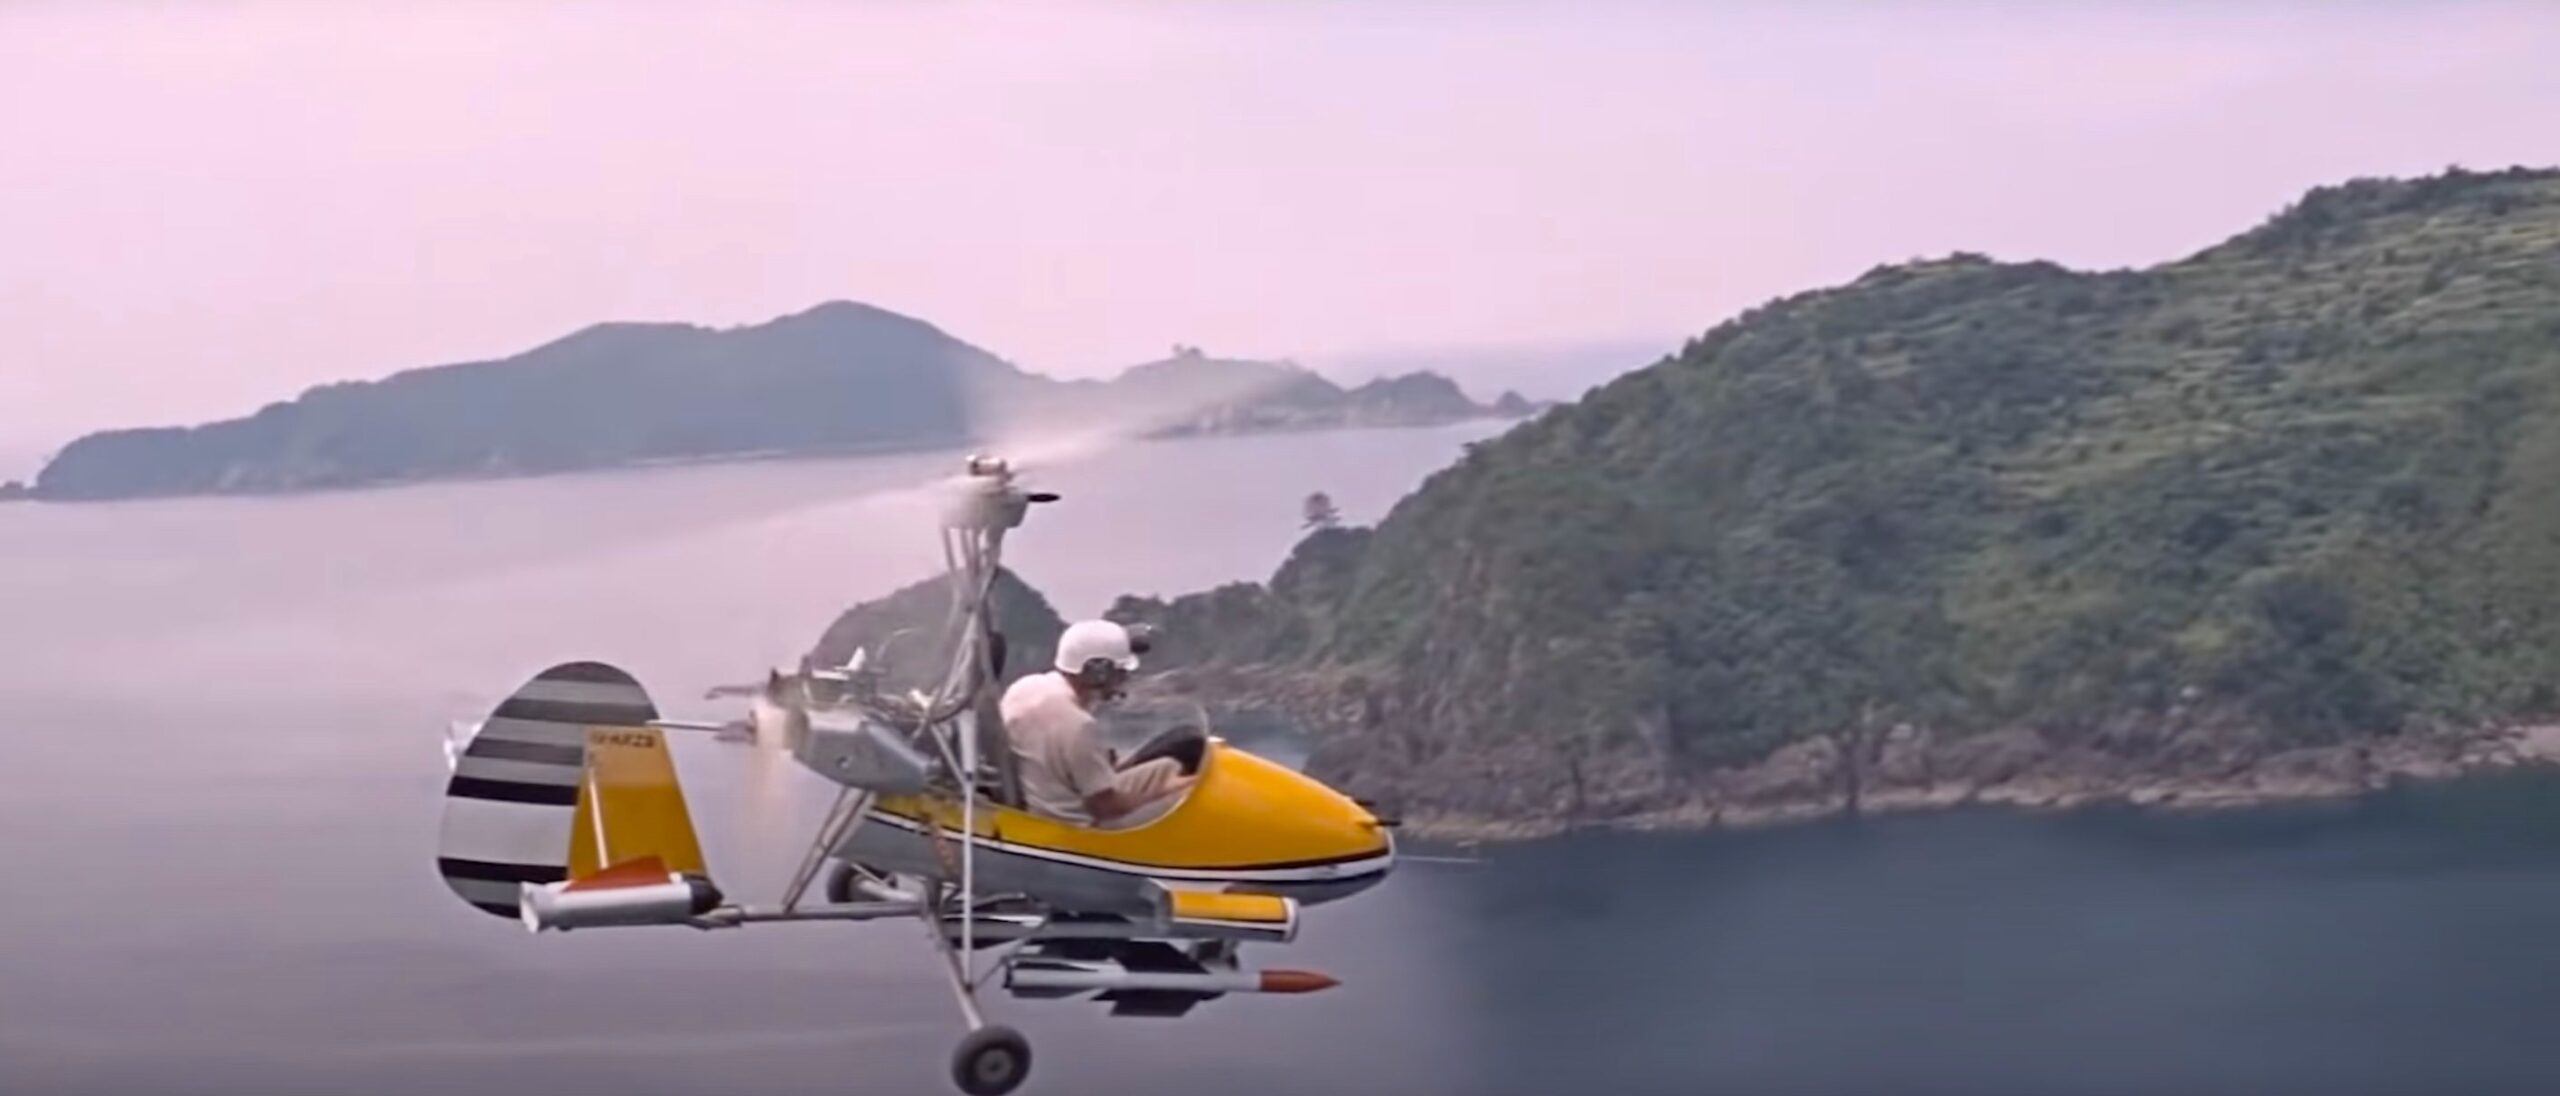 James-Bond-Gyrocopter-scaled.jpg